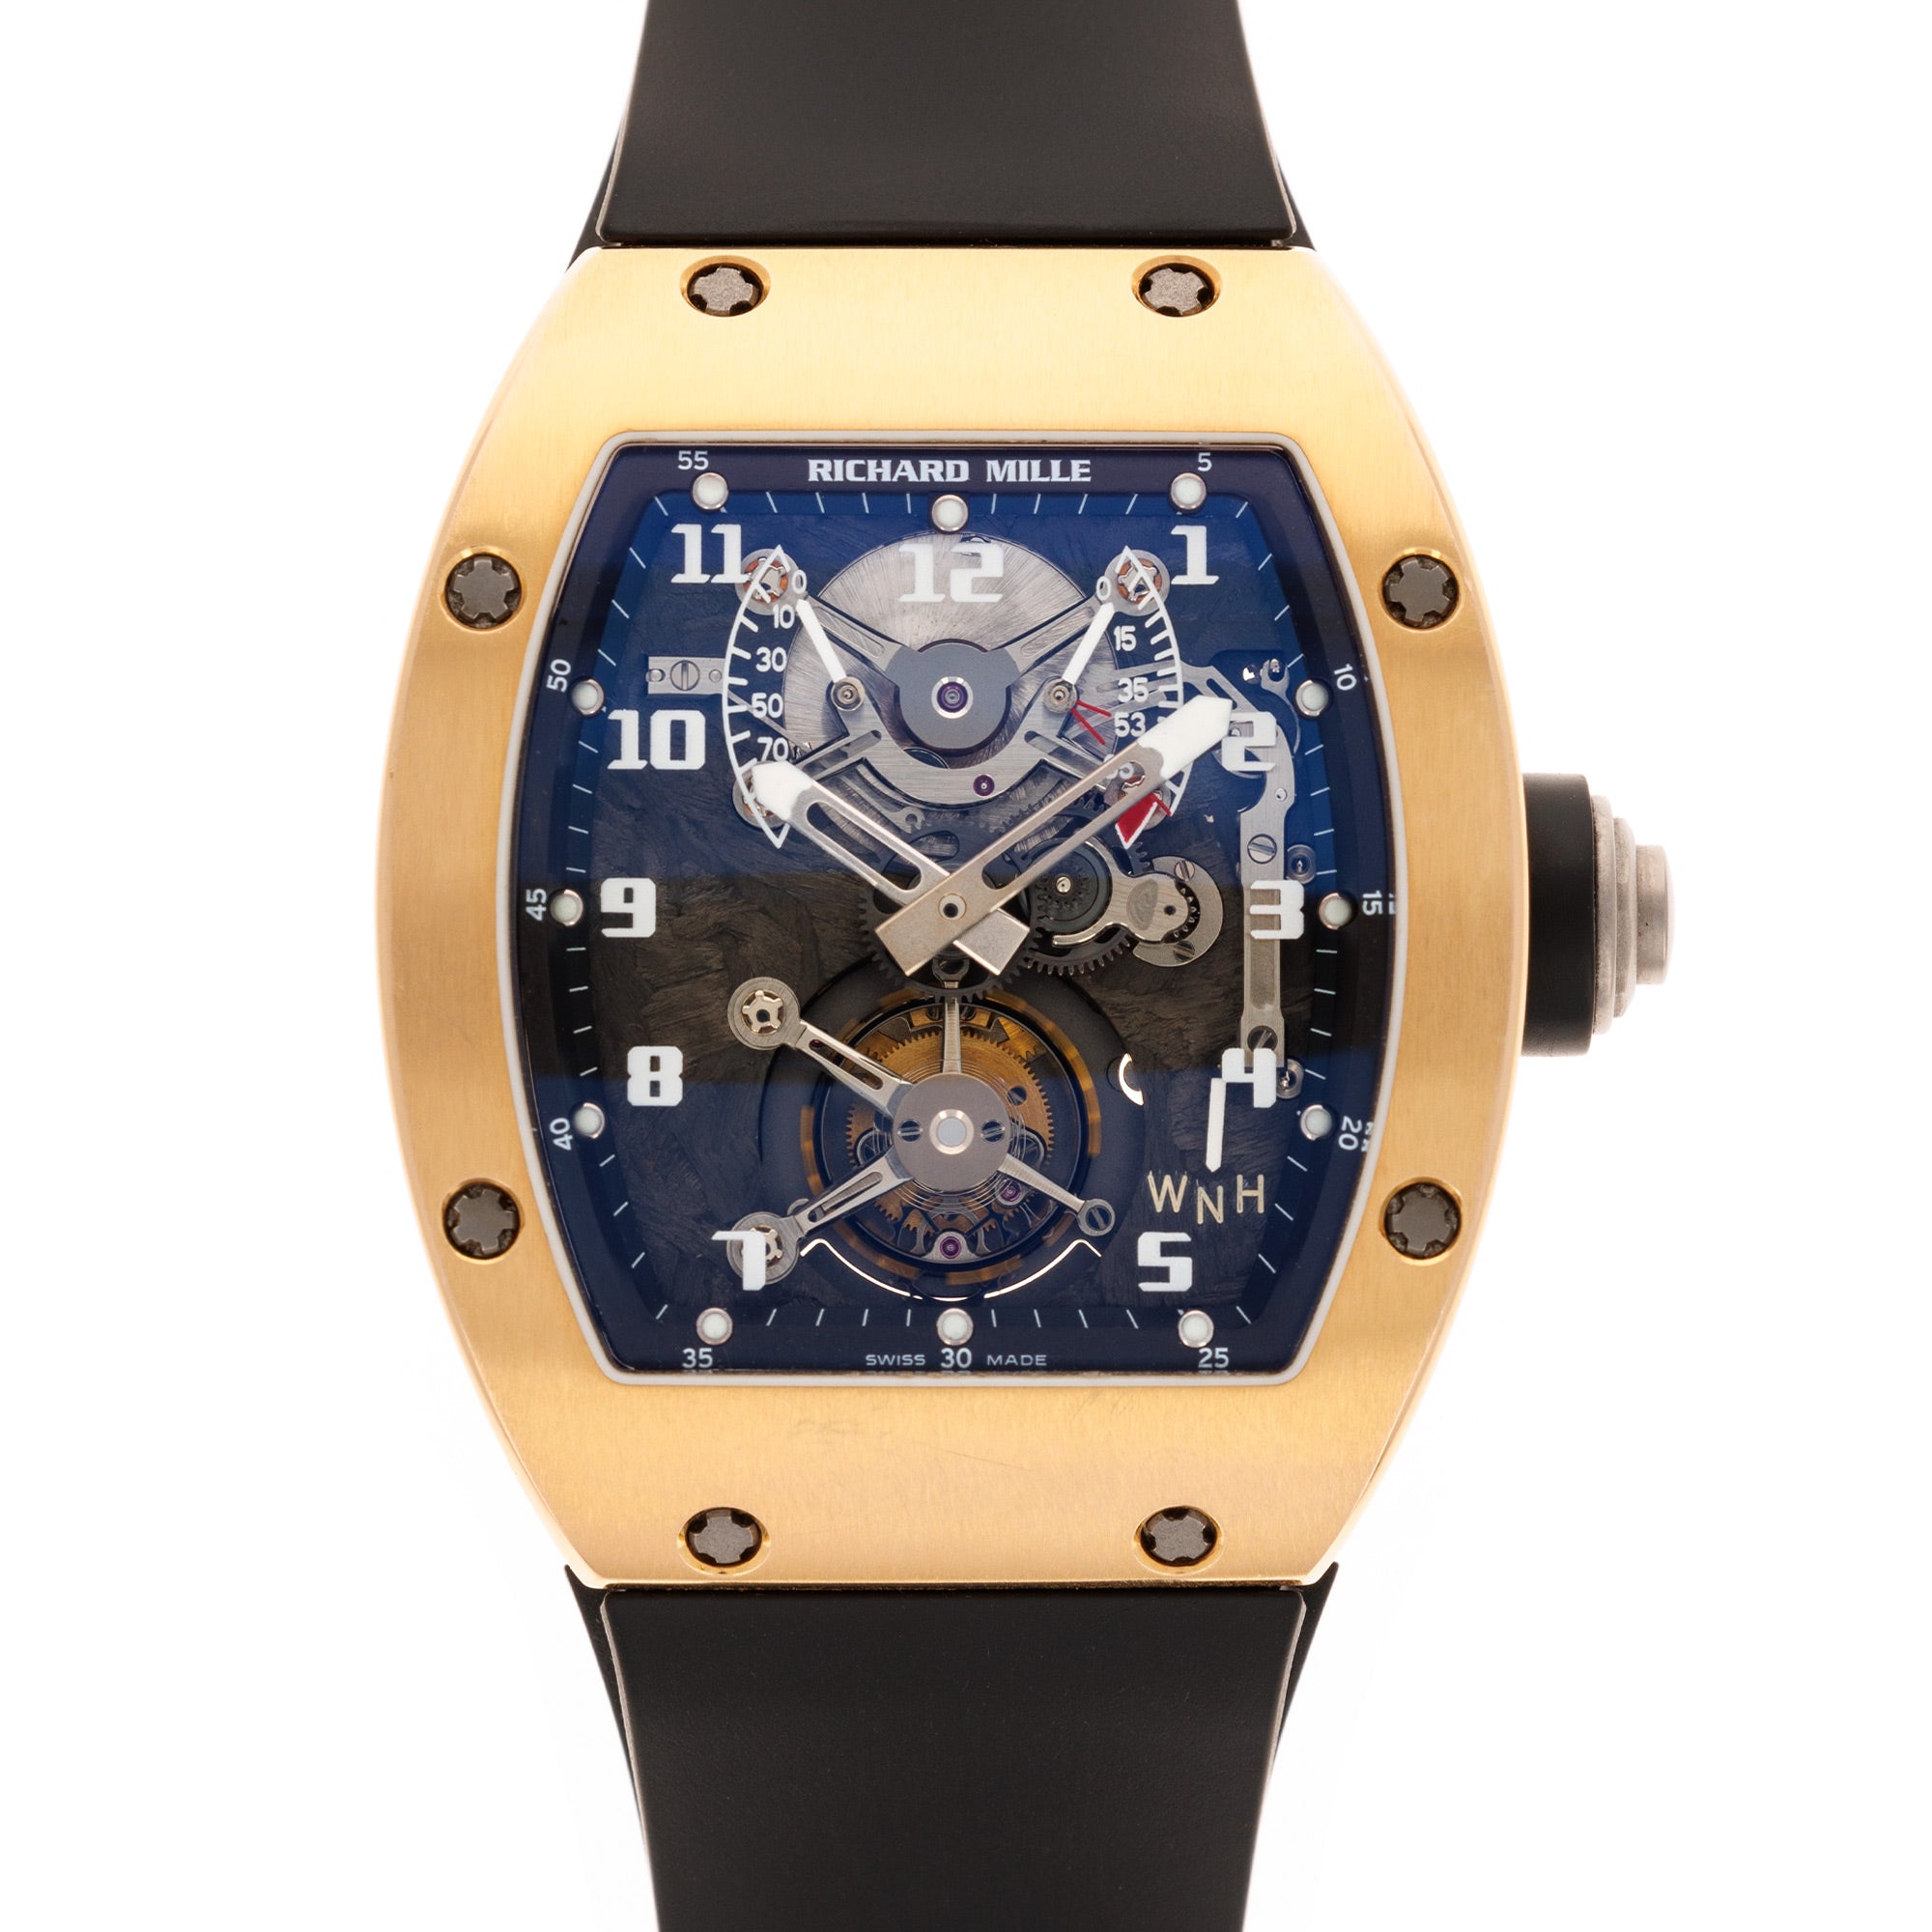 Richard Mille - Richard Mille Rose Gold Tourbillon RM002 - The Keystone Watches